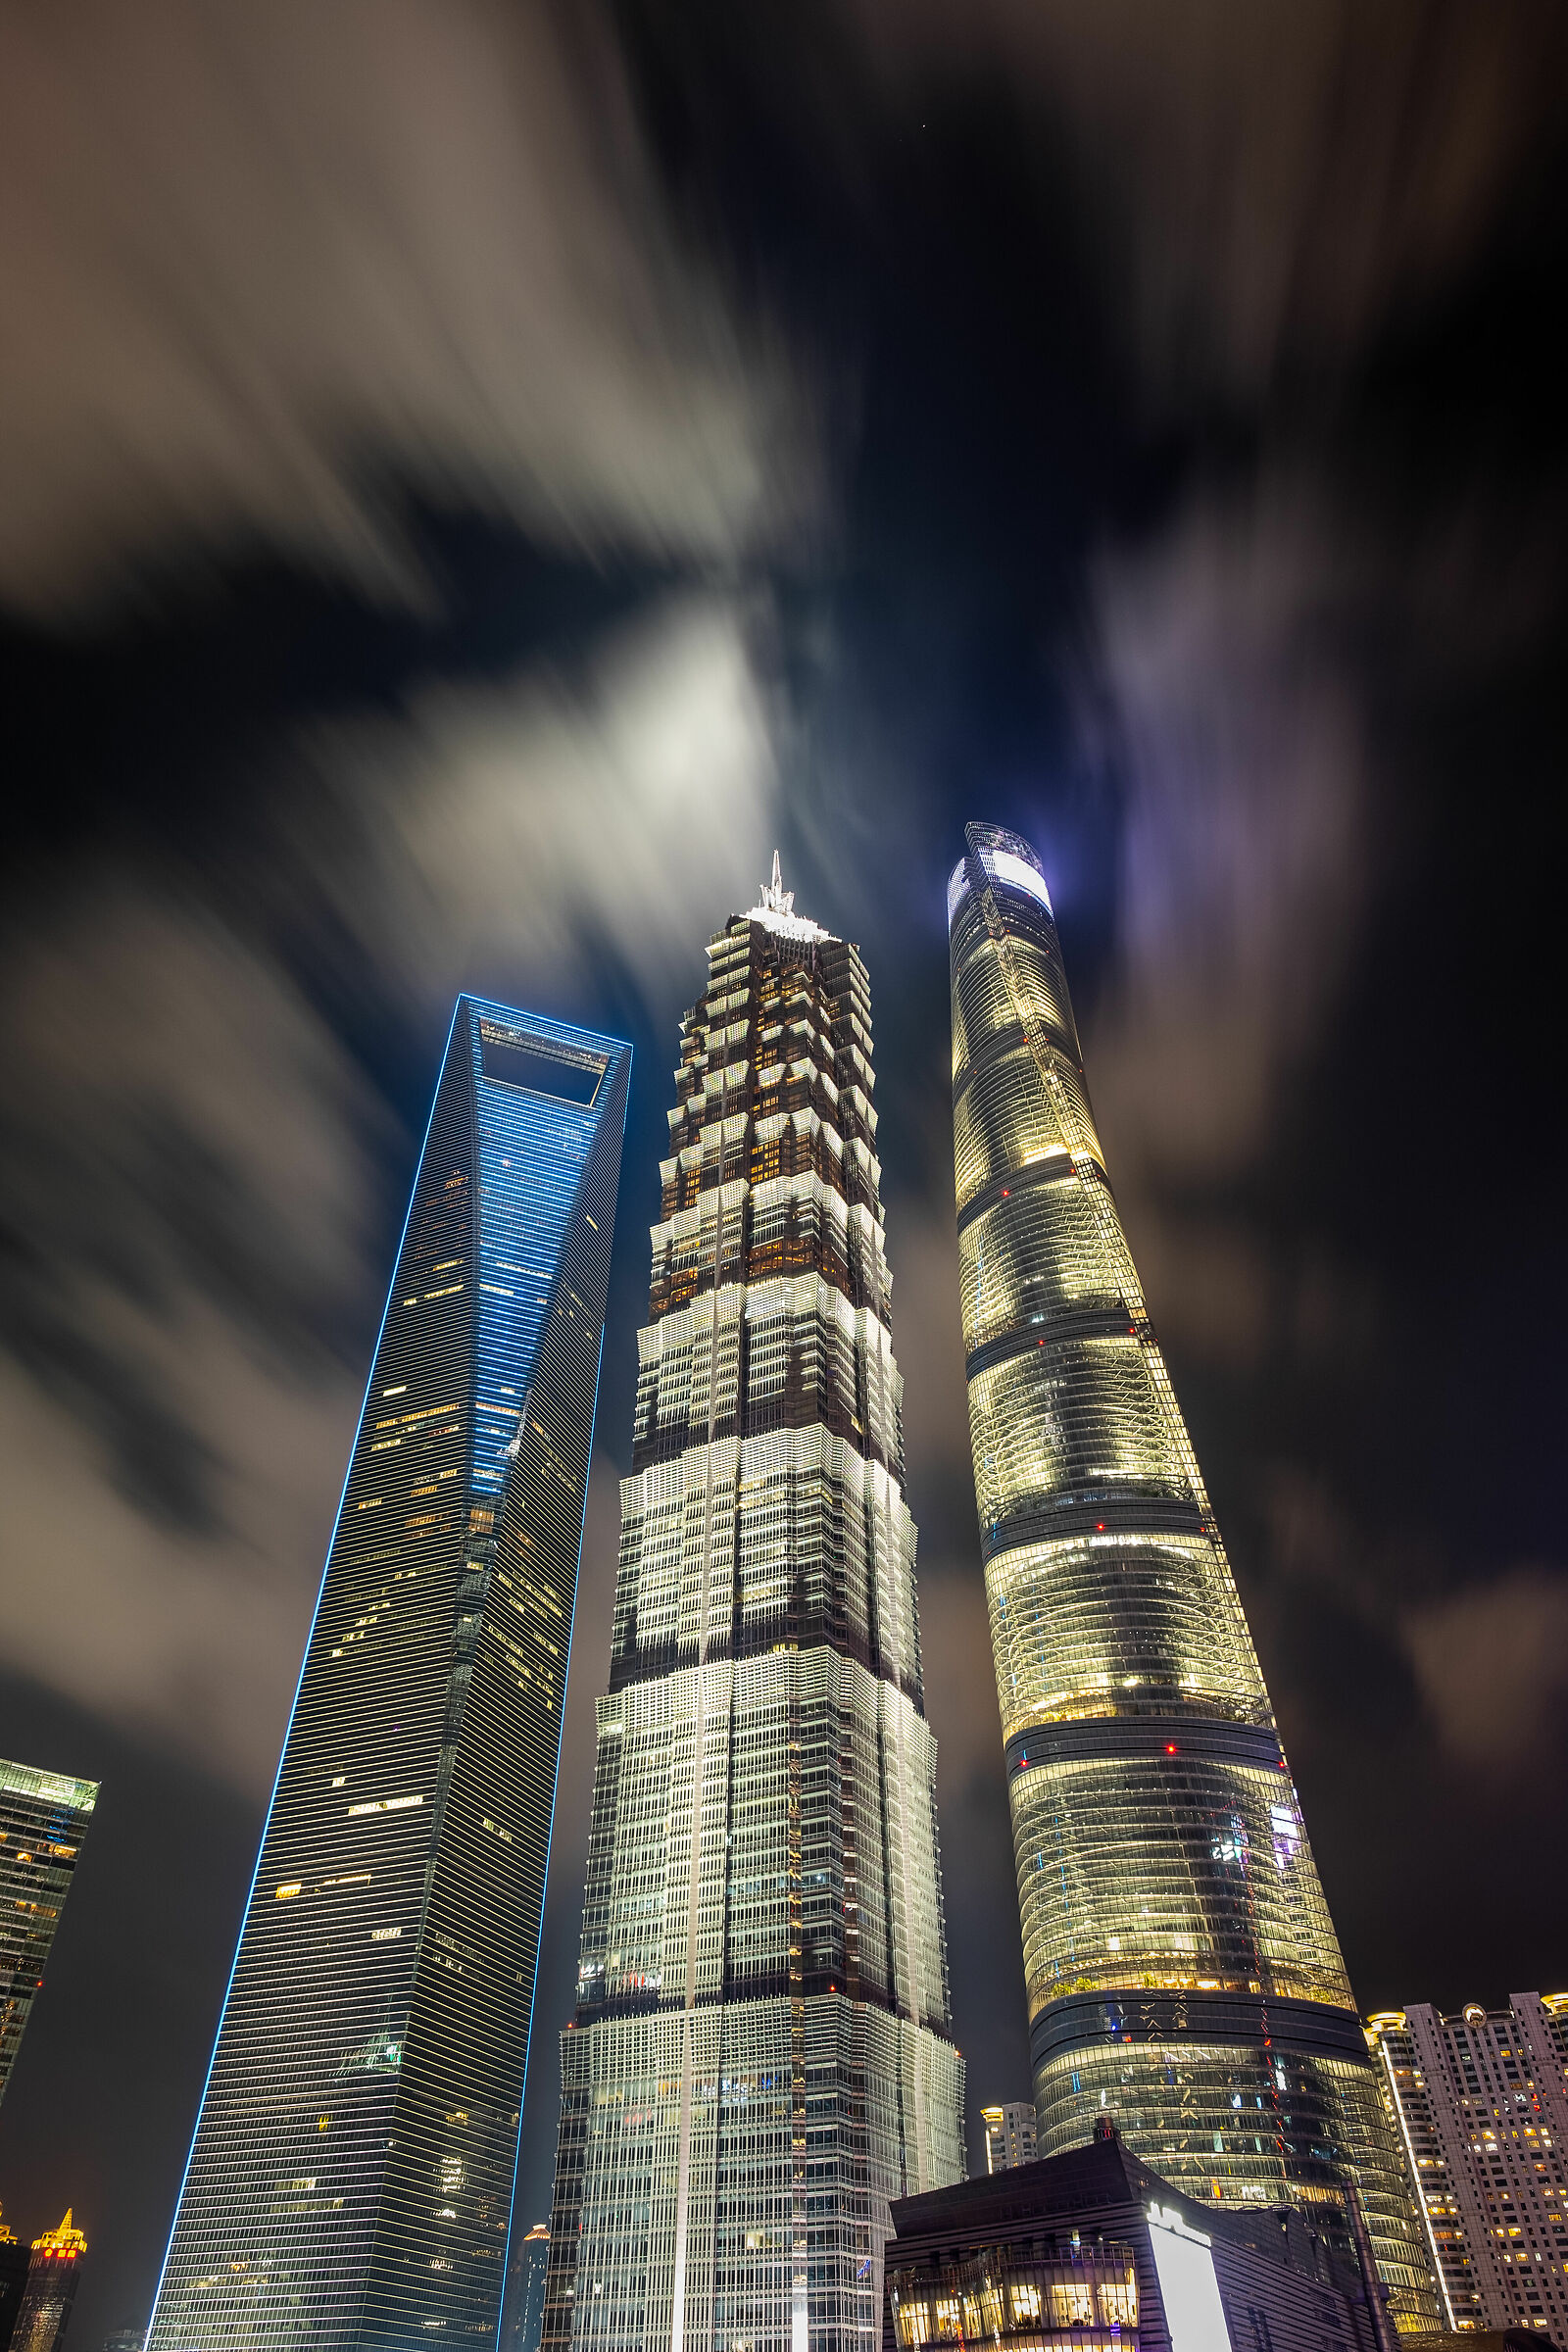 Shanghai's skyscrapers...